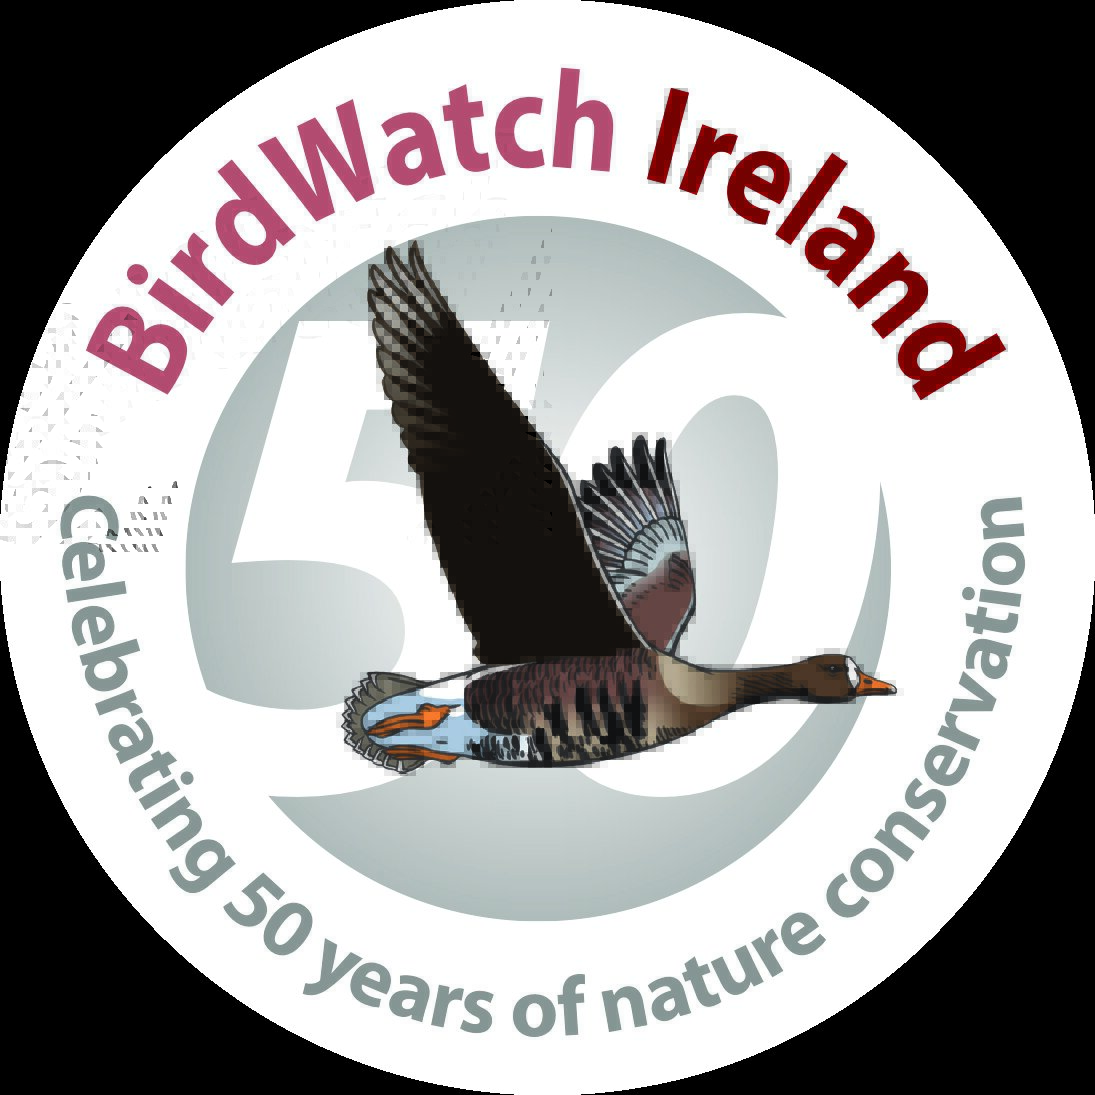 birdwatch-ireland-fiftieth-anniversary-logo